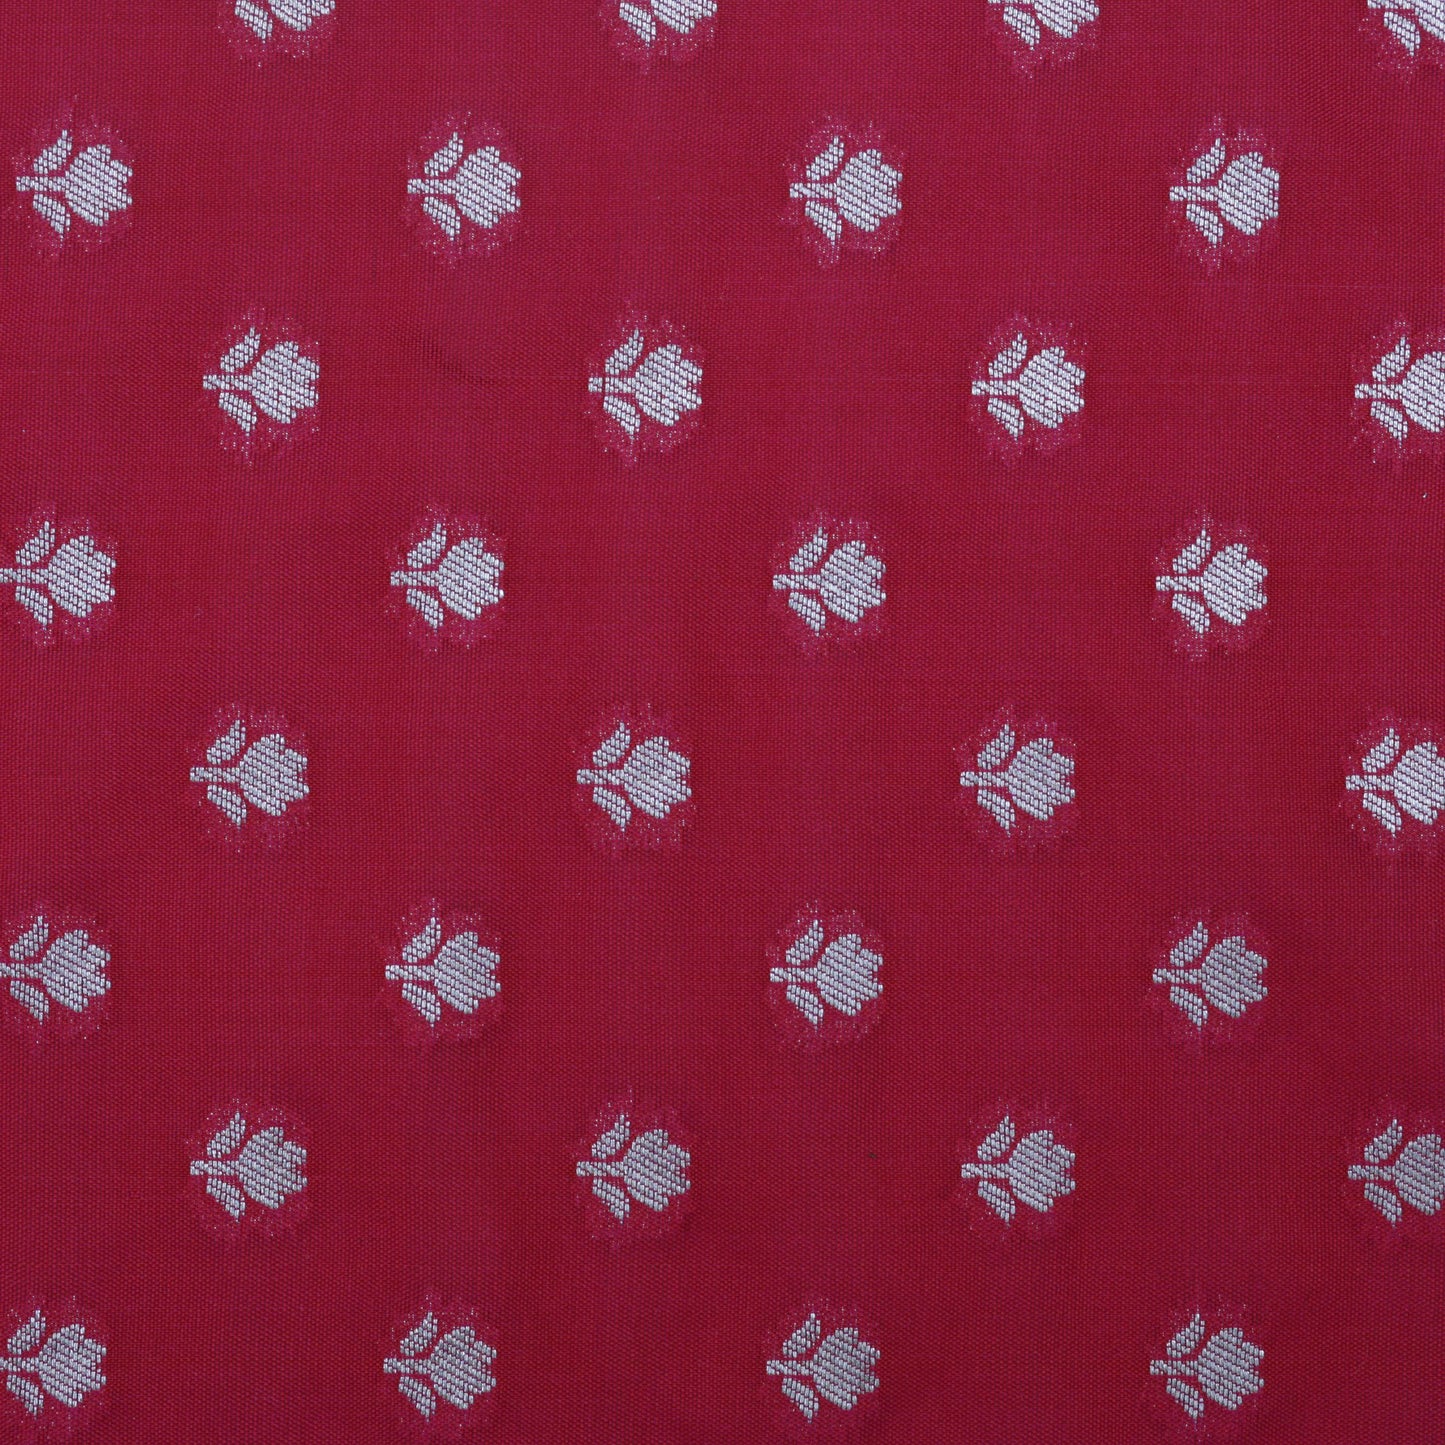 Rani Color Chinia Silk Brocade Fabric